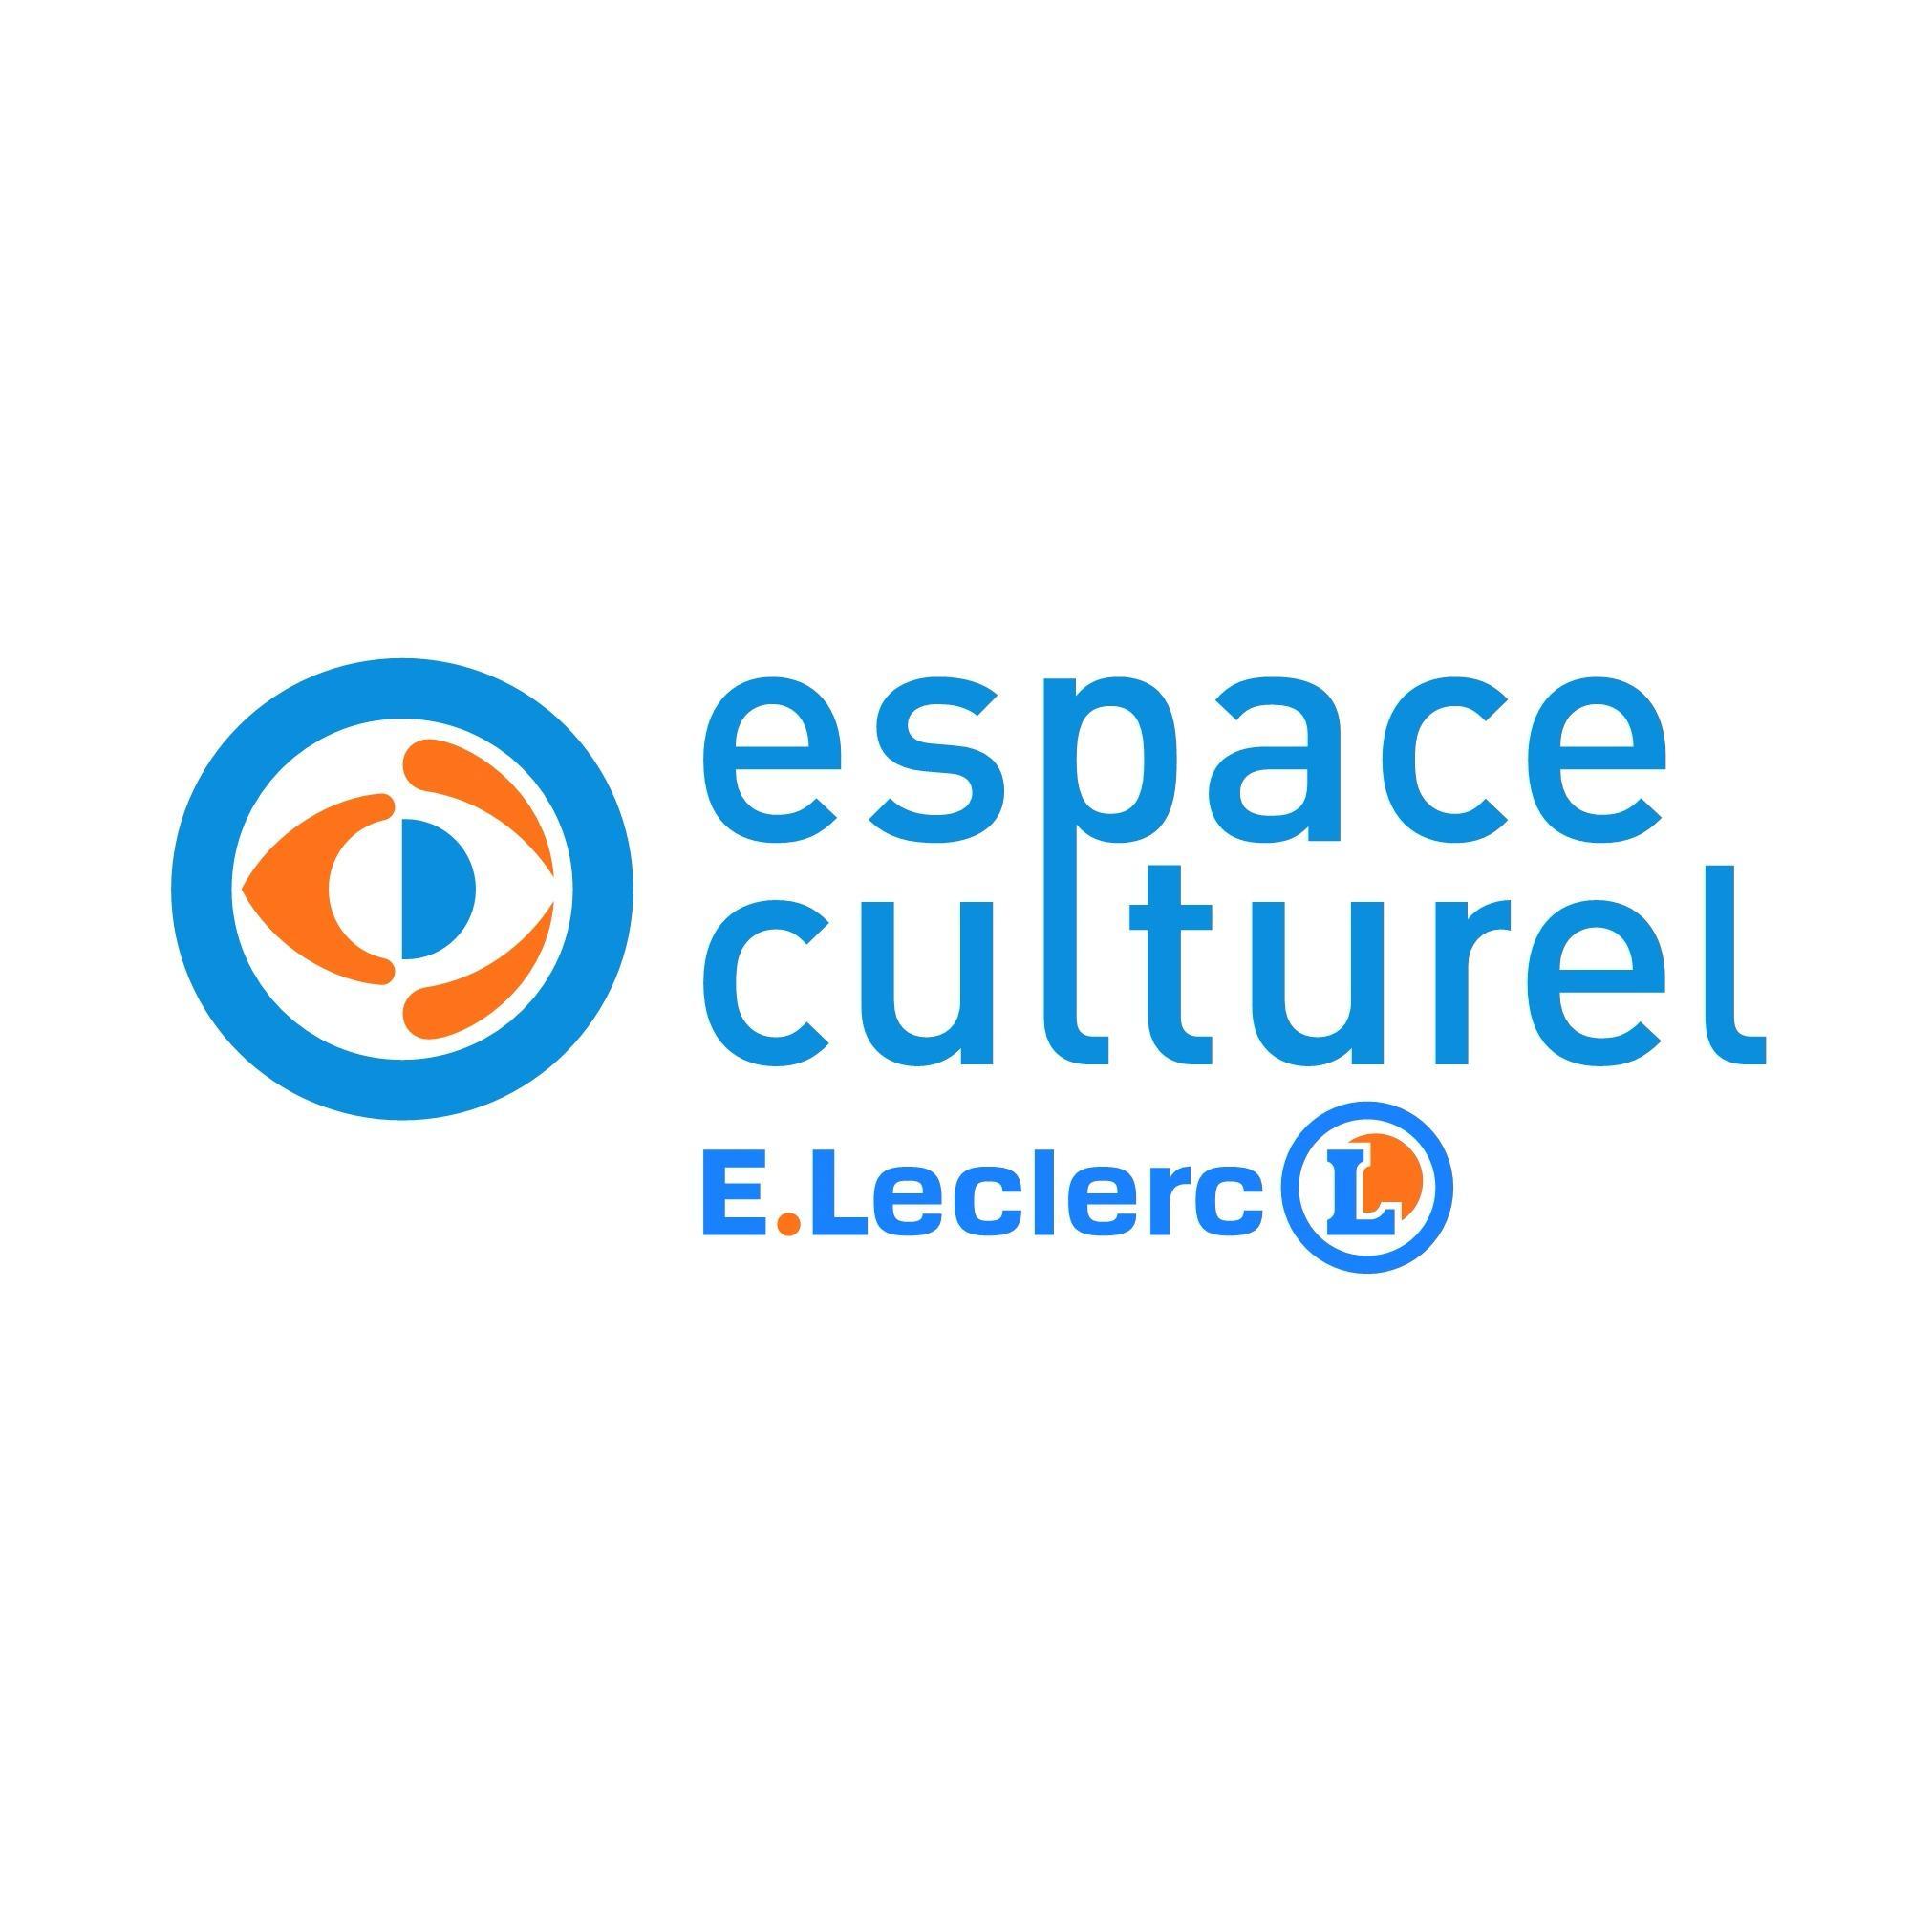 E.leclerc Espace Culturel Ploufragan